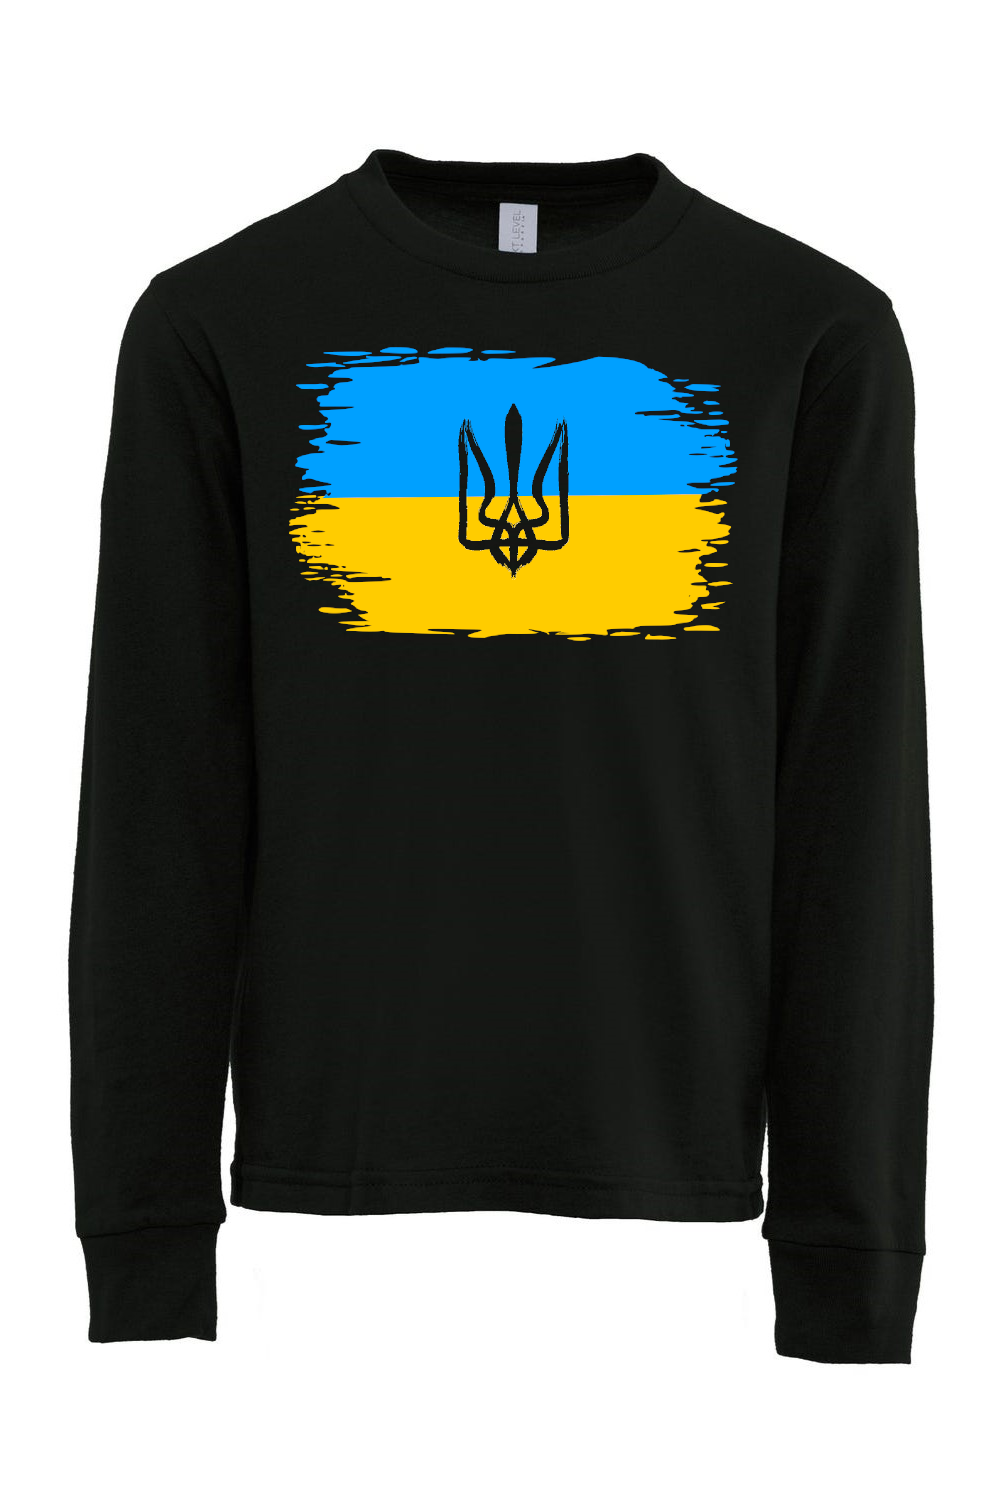 Youth long sleeve shirt "Ukrainian flag"